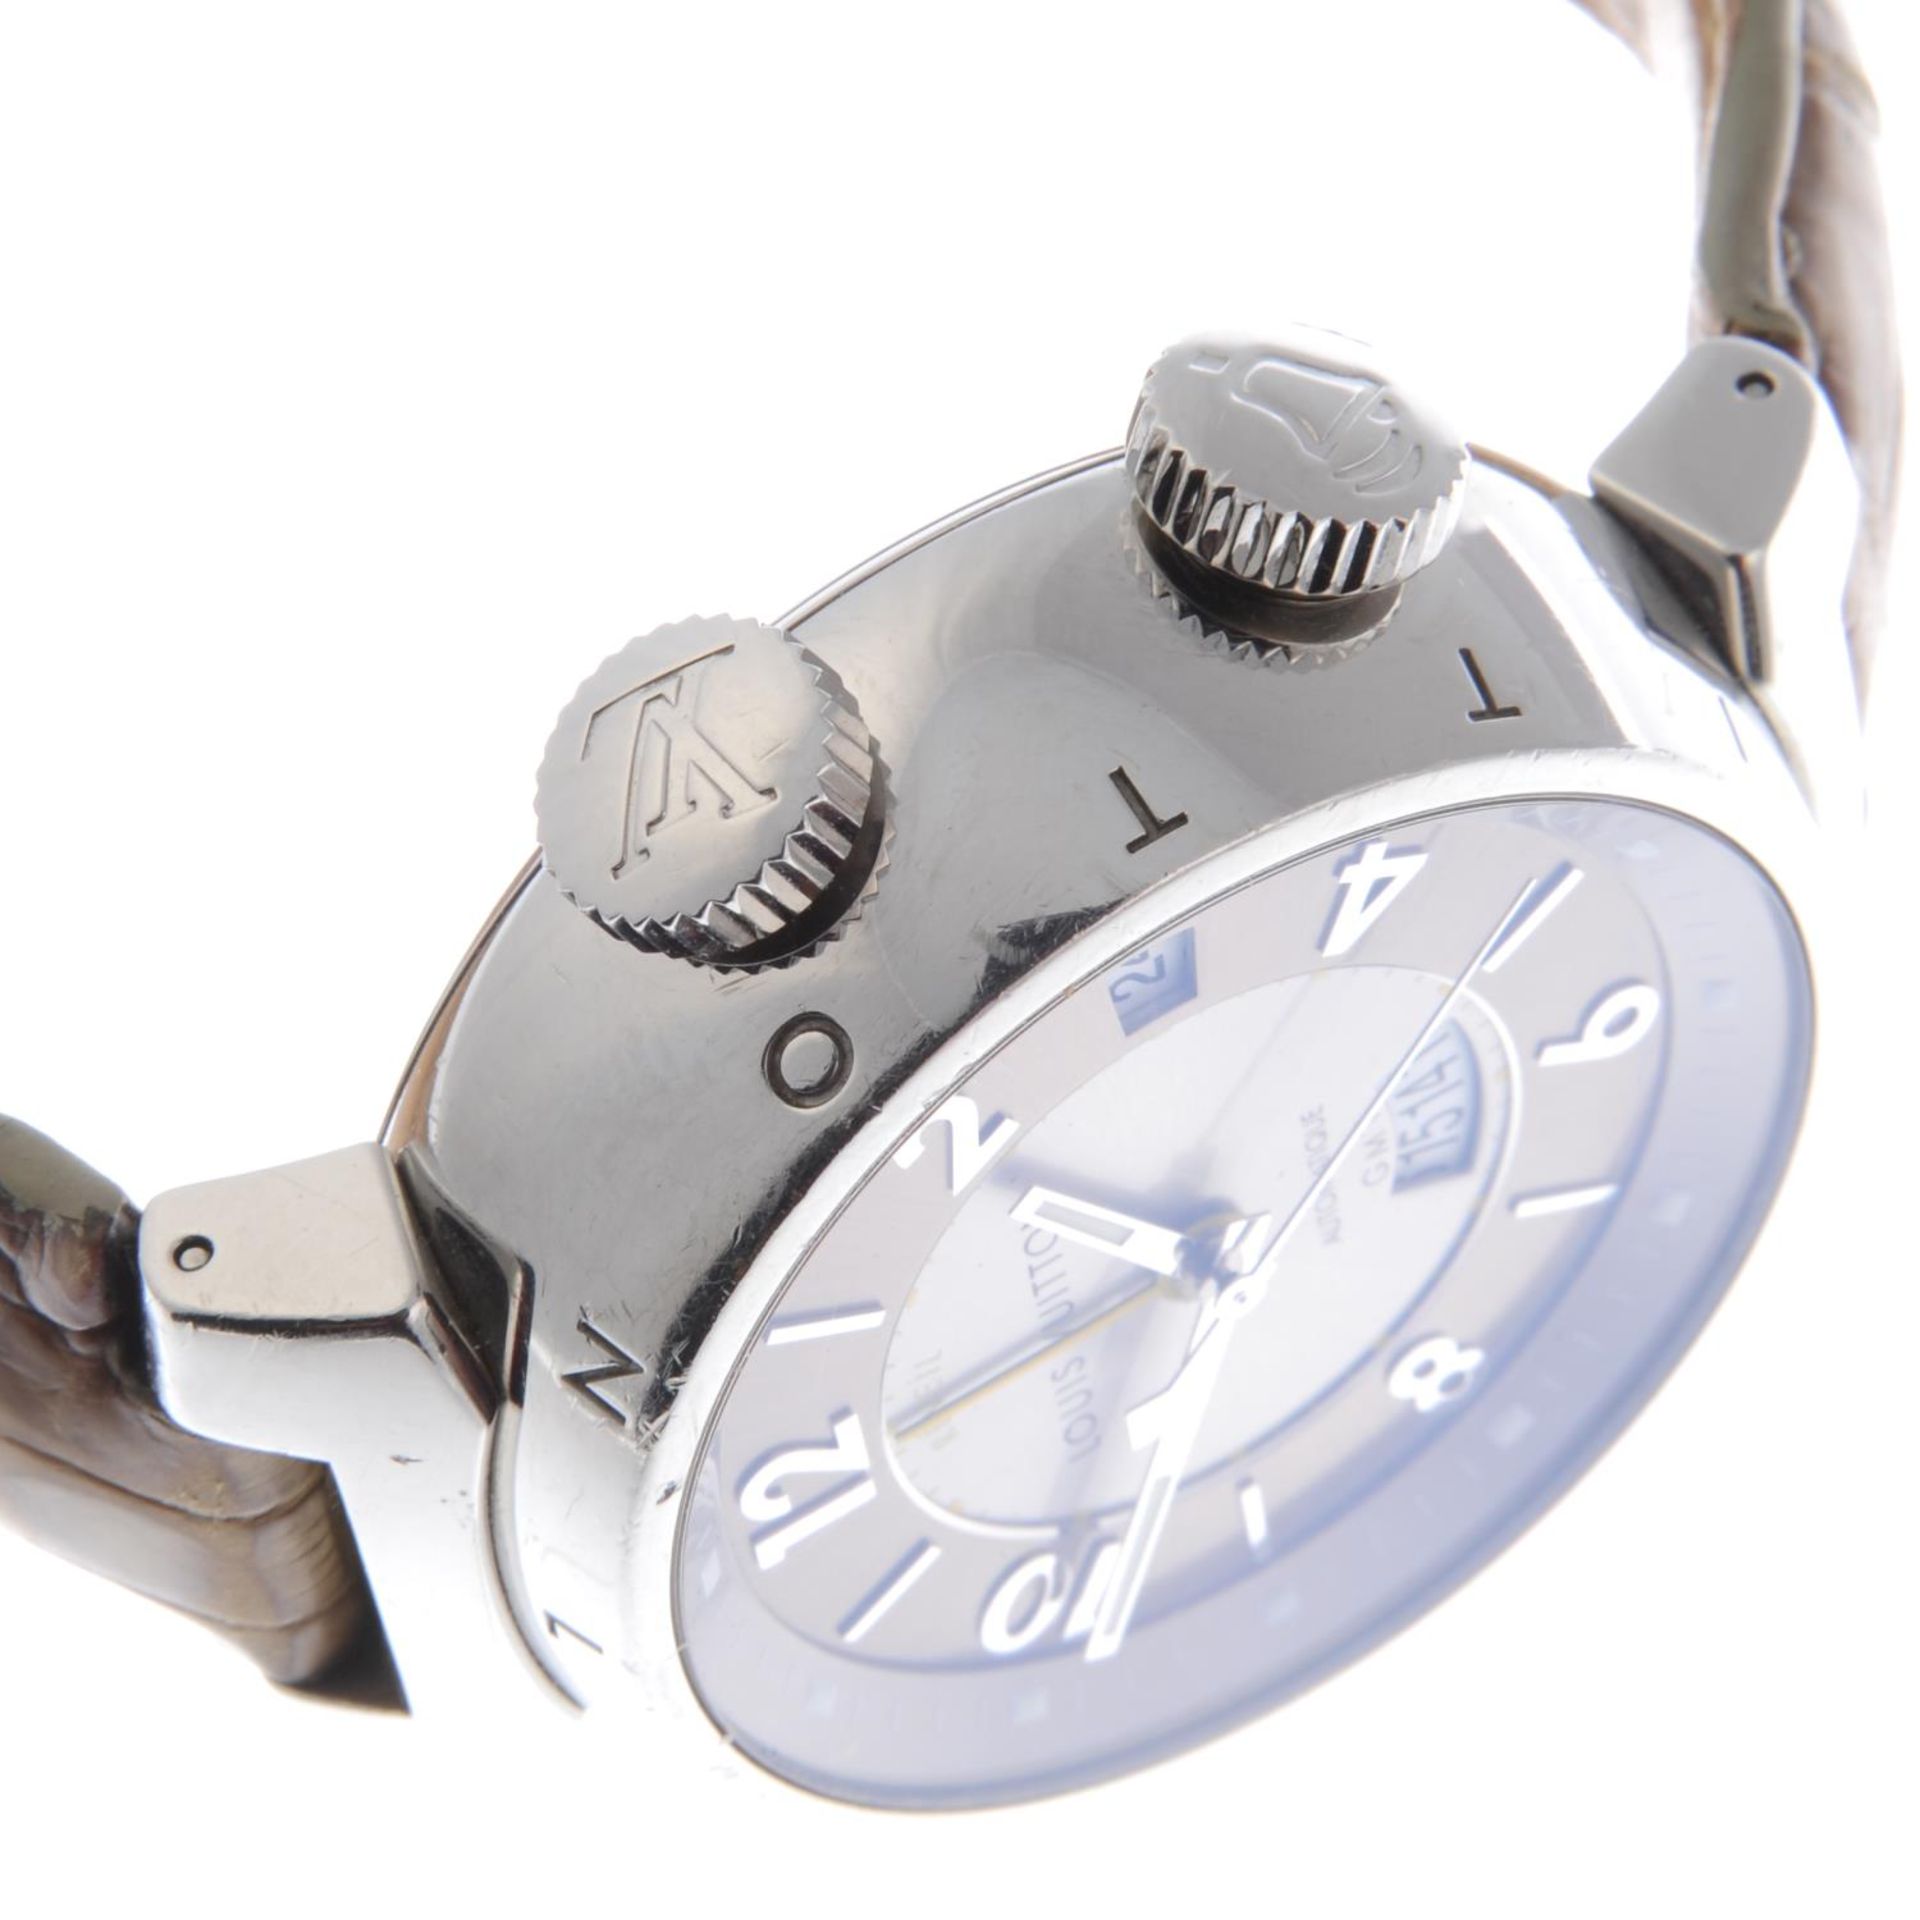 LOUIS VUITTON - a gentleman's Tambour GMT wrist watch. - Image 4 of 6